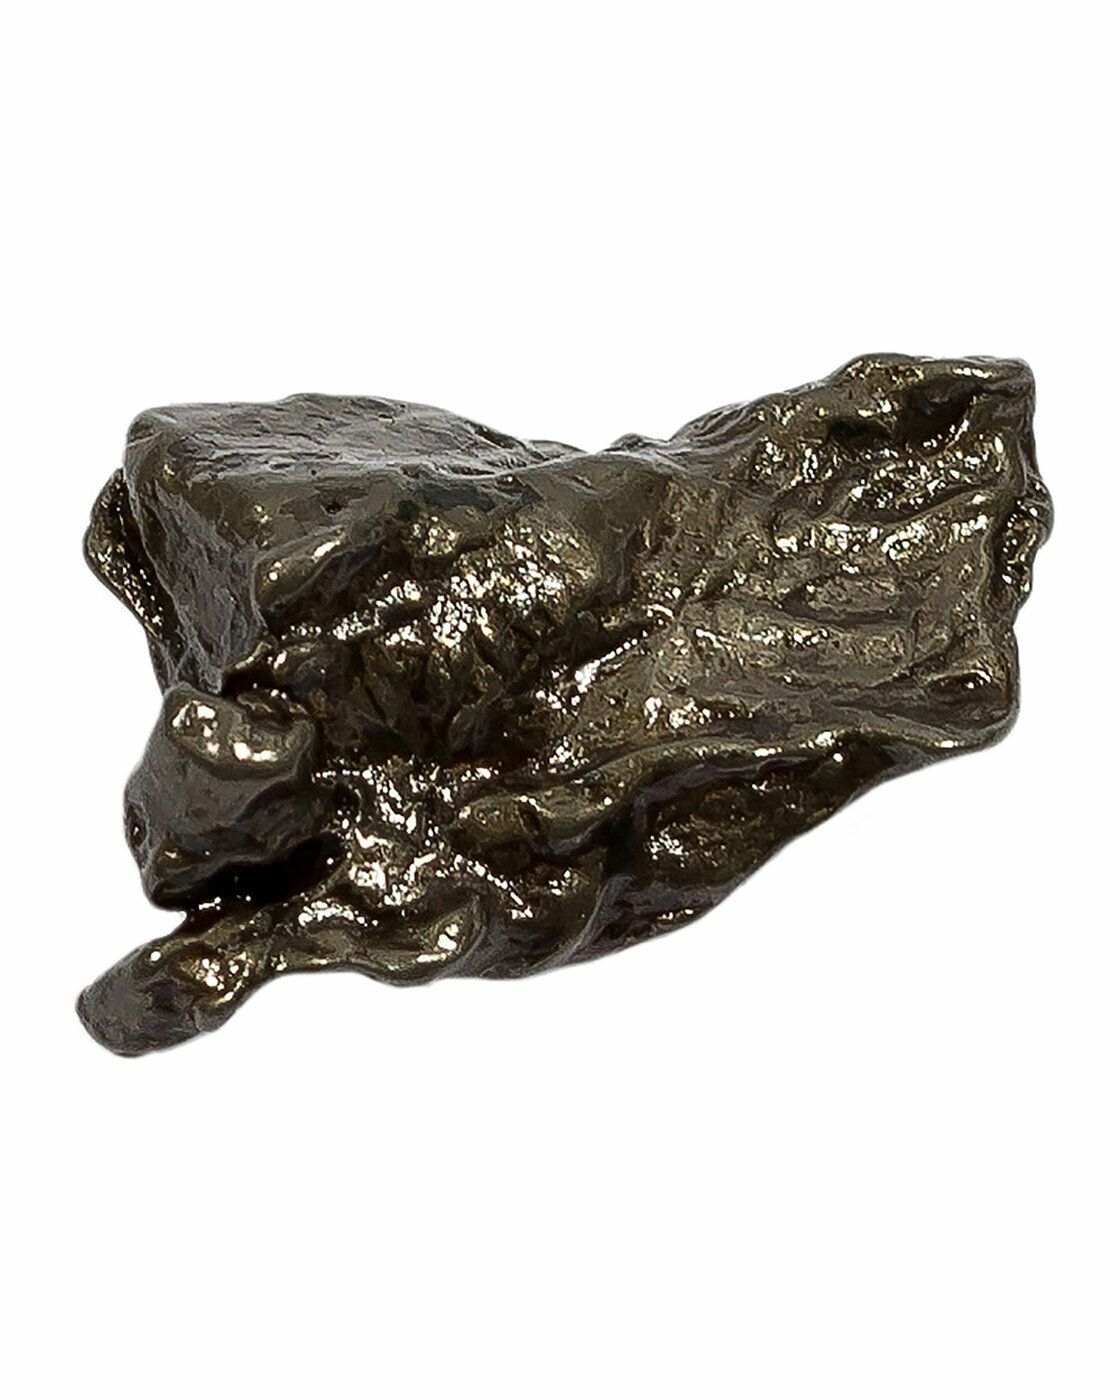 Метеорит железный Сихоте-Алинский размер 15х11х3 мм вес 275 грамм в коллекцию